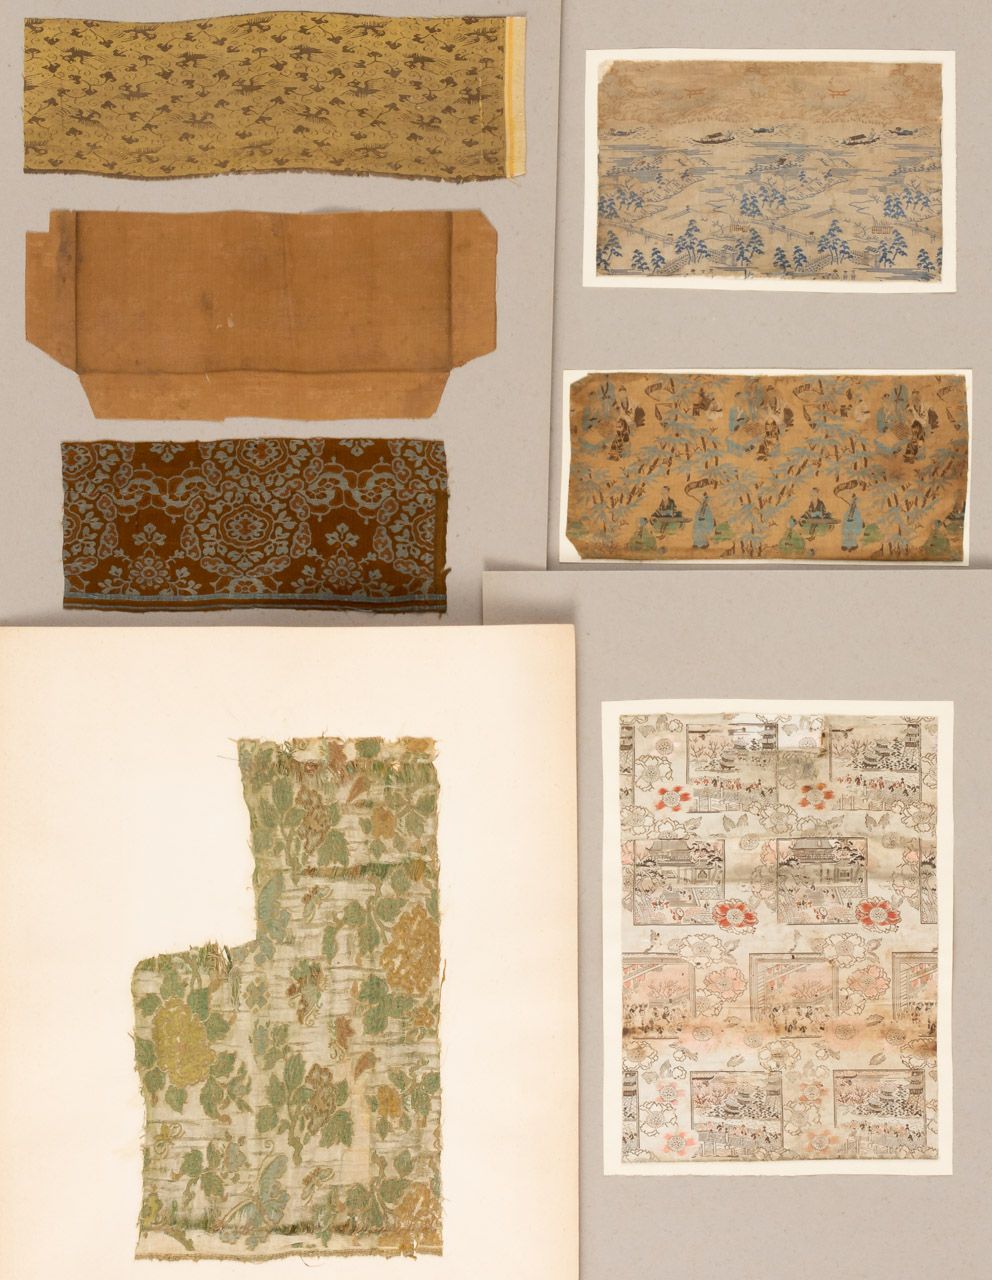 SIEBEN TEXTIL FRAGMENTE 中国，19世纪或更早

从10.5 x 23厘米到30.5 x 18厘米